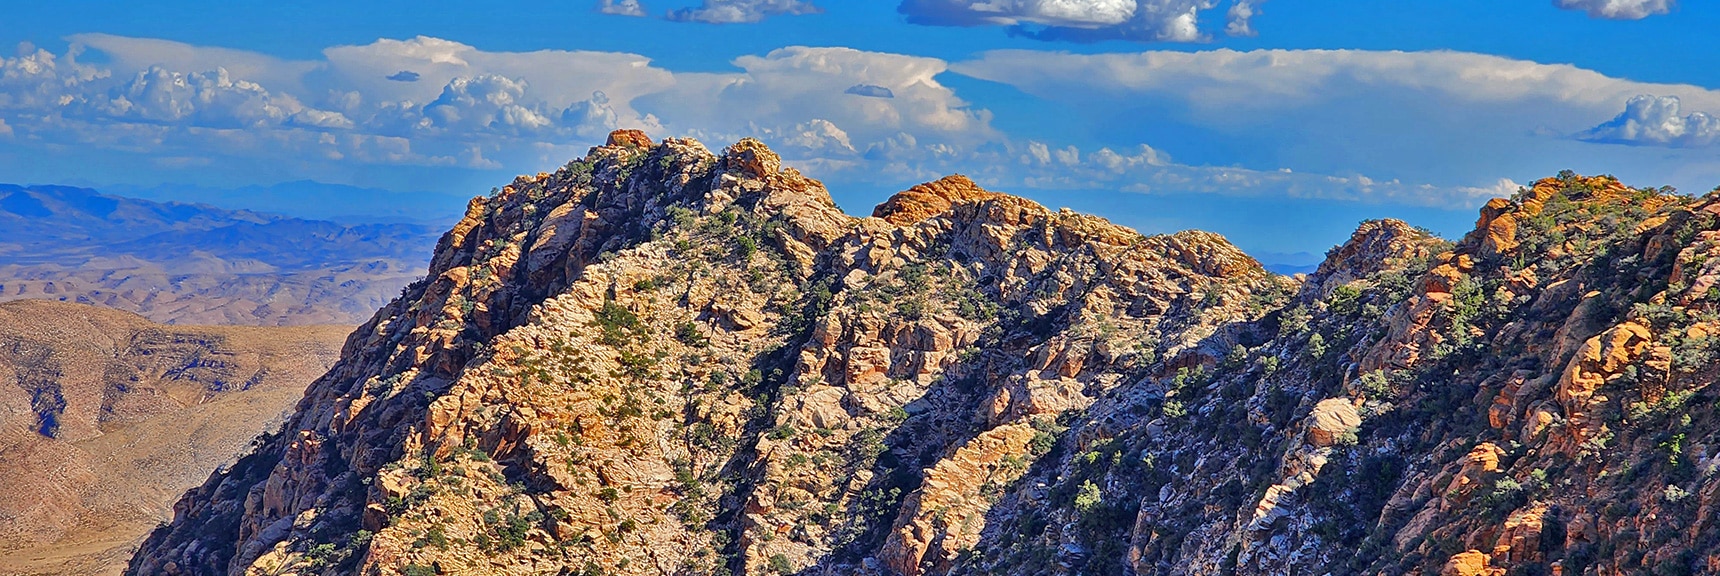 Approaching the Ridge Leading to Hollow Rock Peak | Hollow Rock Peak | Rainbow Mountain Wilderness, Nevada